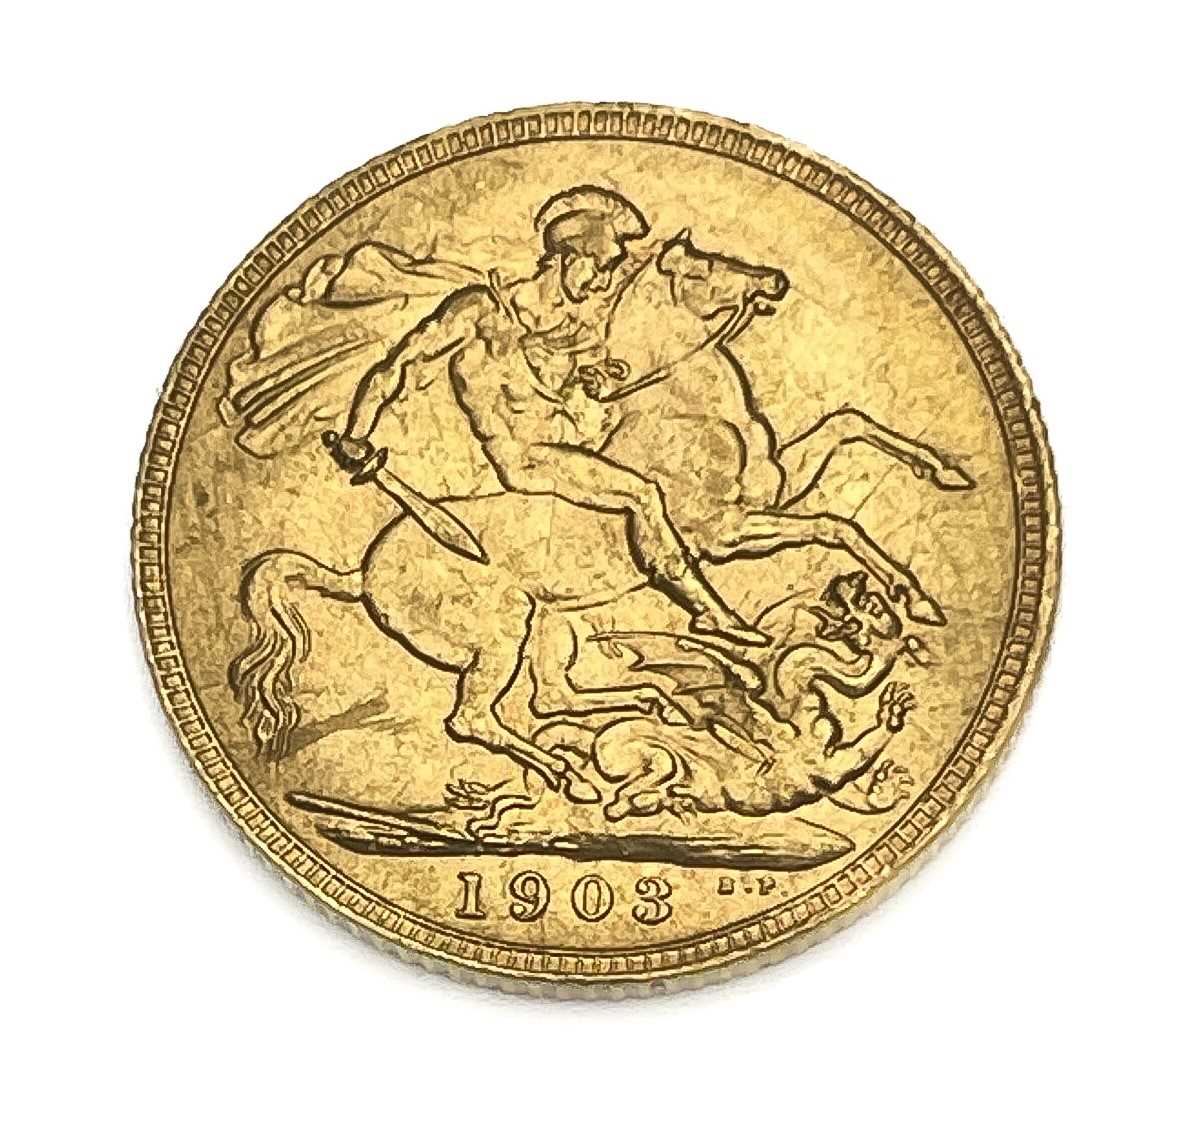 Edward VII, Sovereign, 1903. S3969 - Image 2 of 2